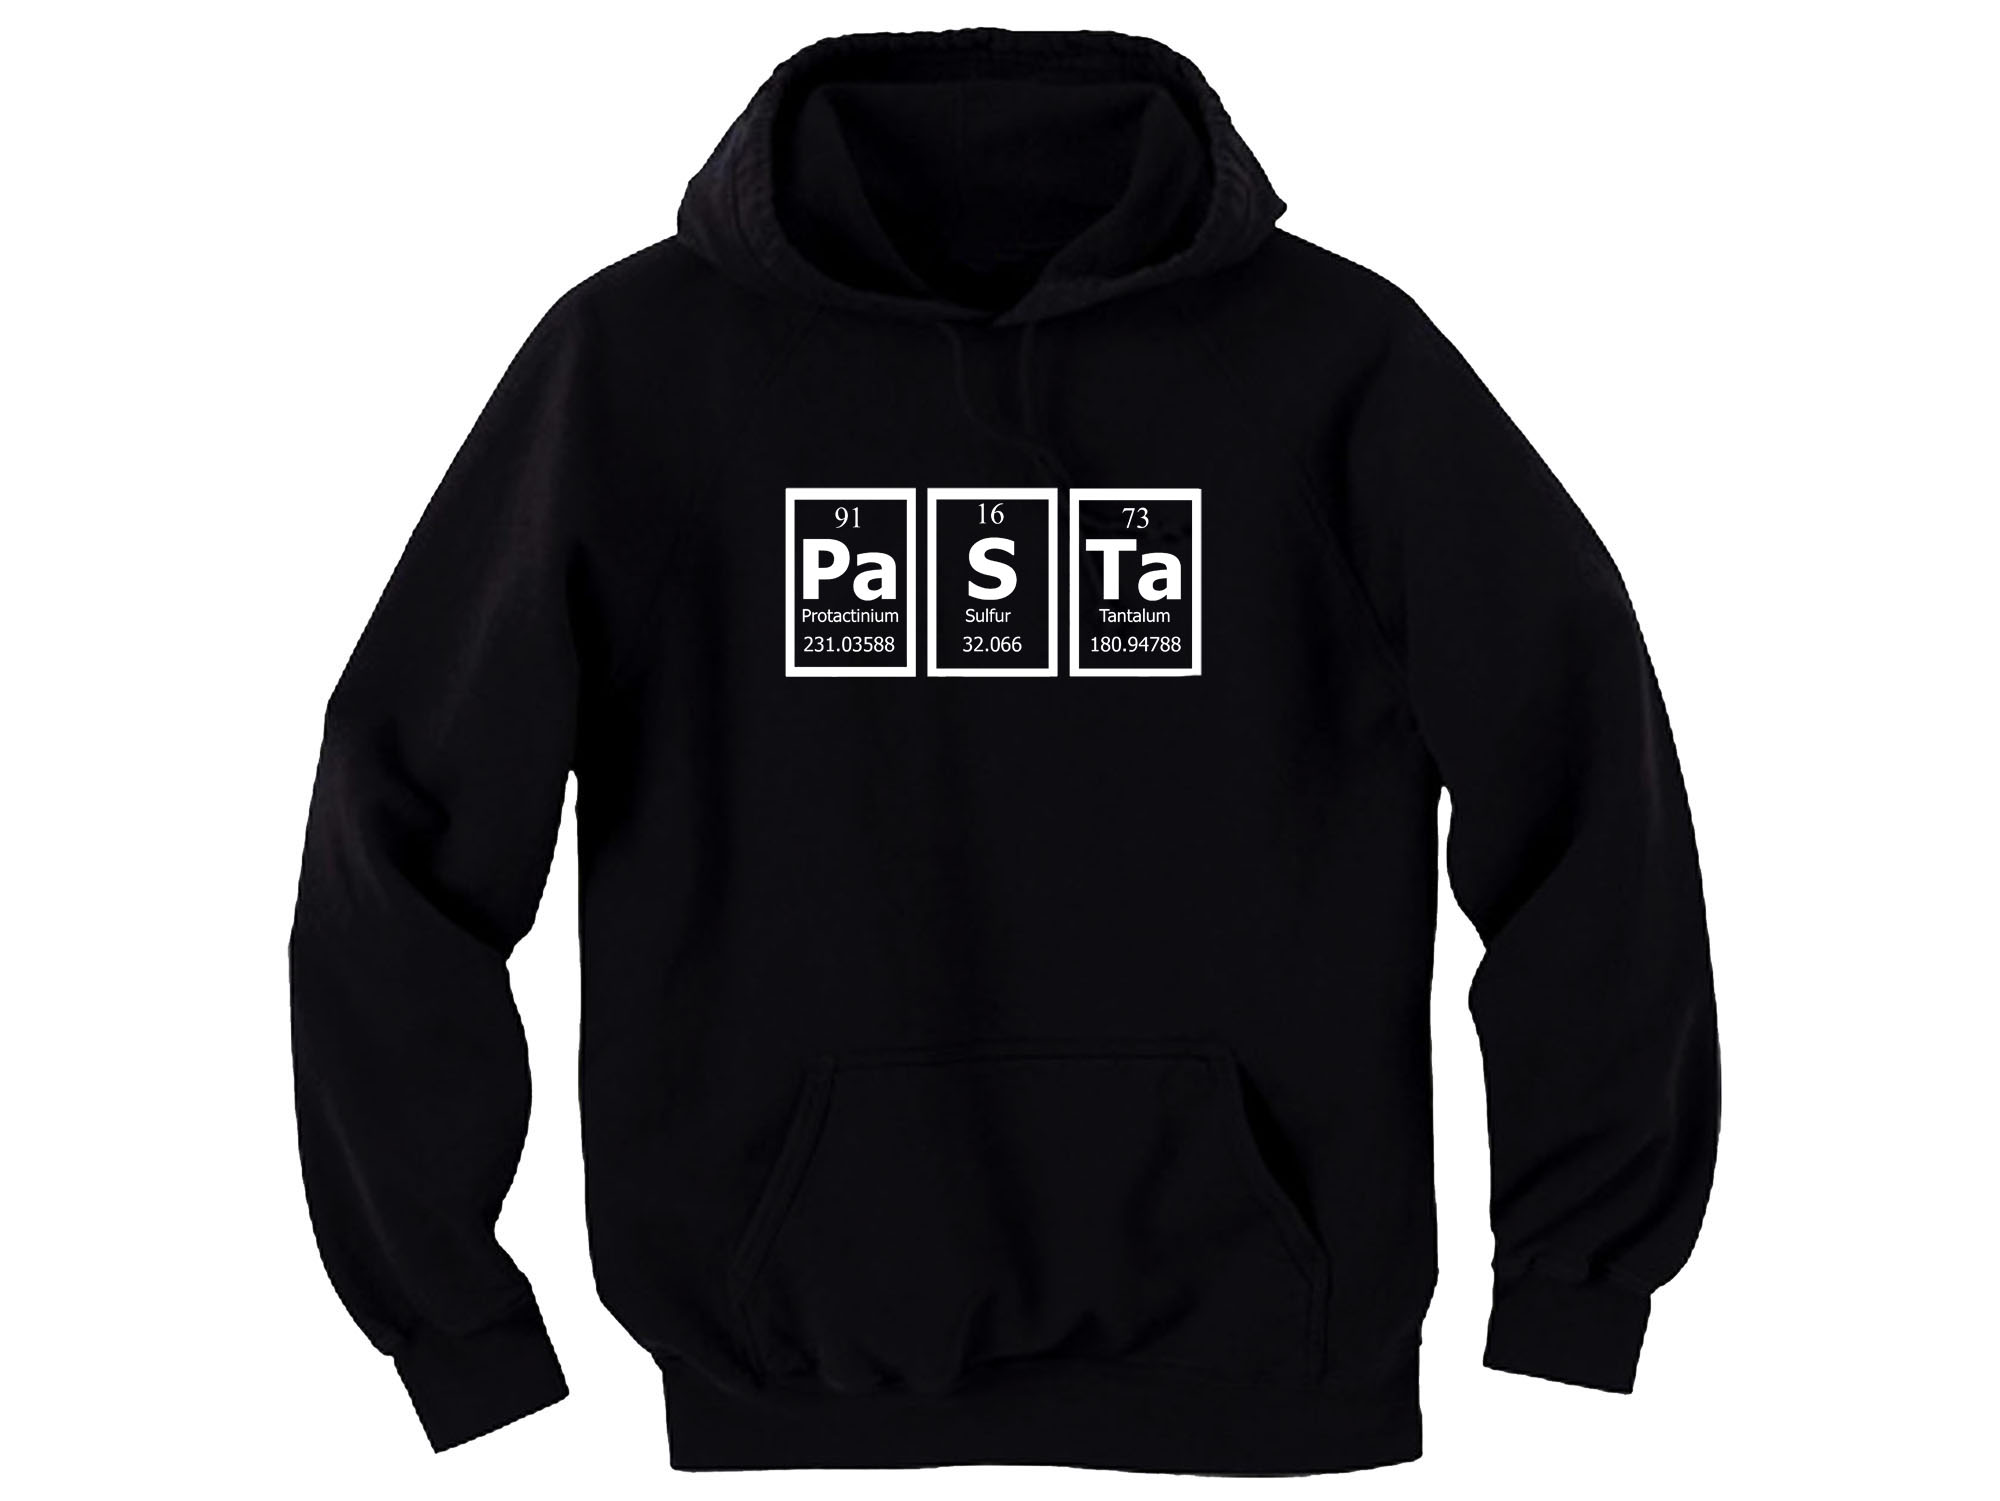 Pasta - periodic table of elements nerdy hooded sweatshirt